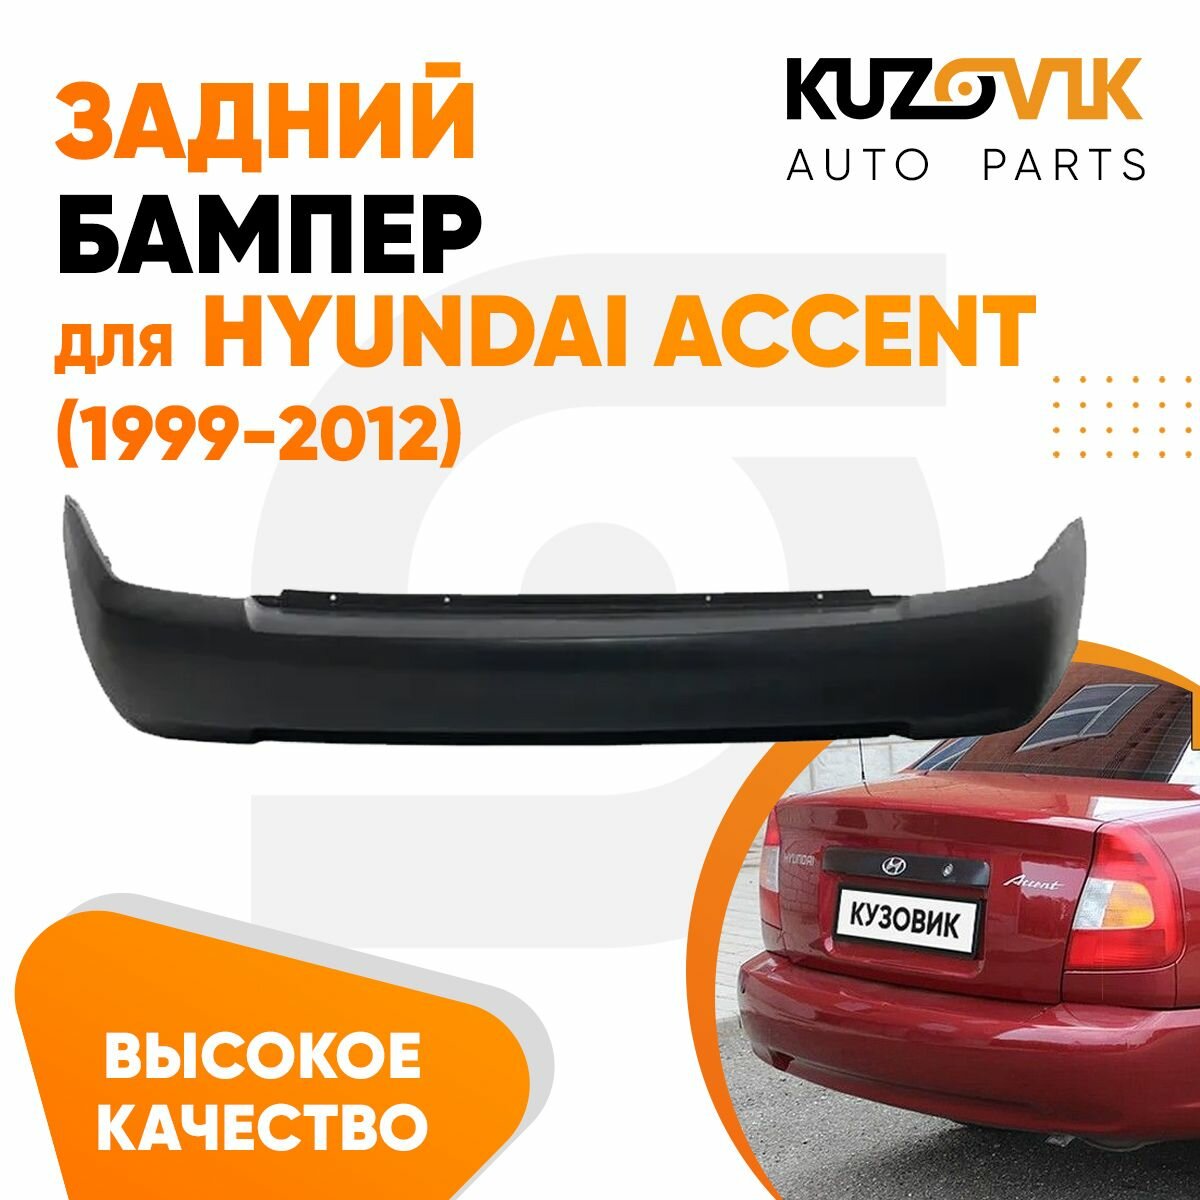 Бампер задний для Хендай Акцент Hyundai Accent (1999-2012)